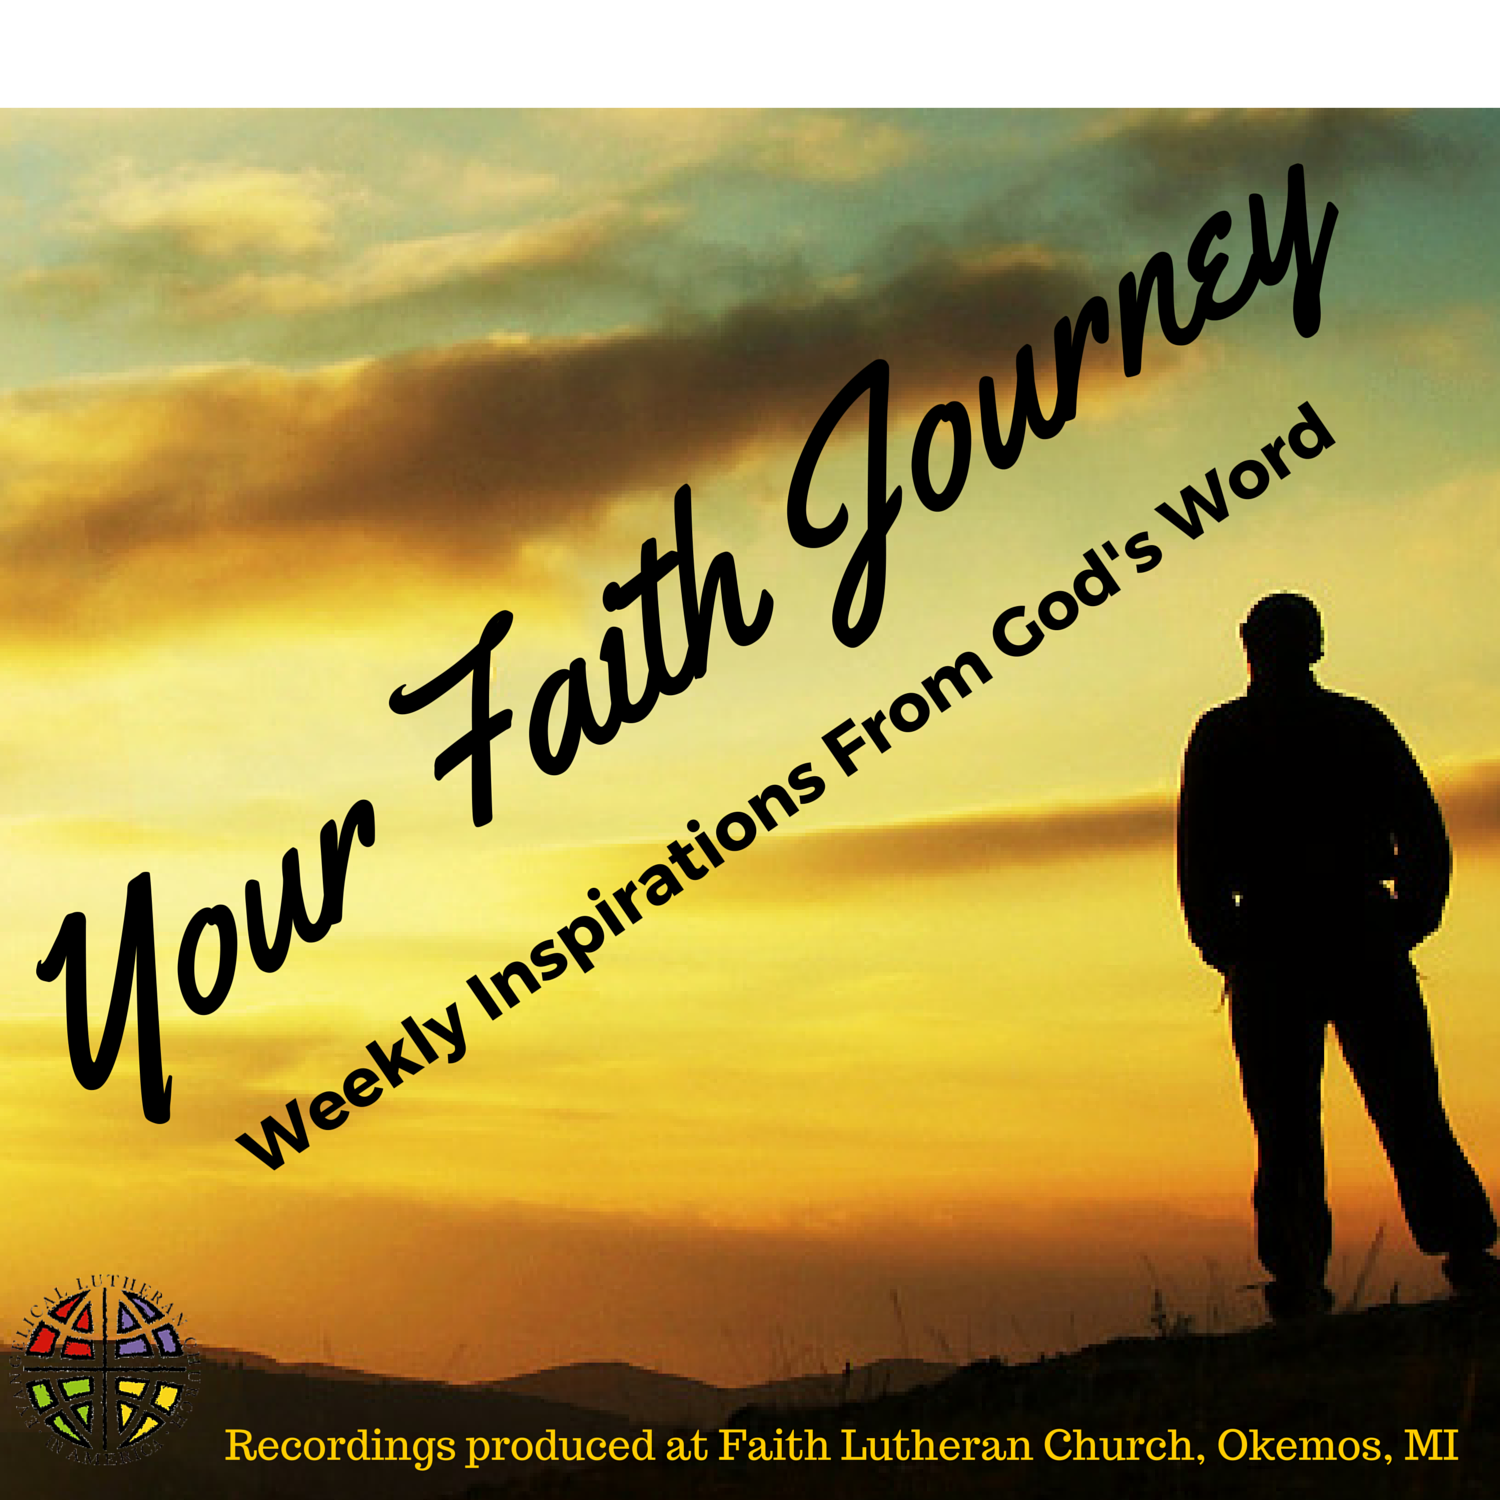 faith journey tours